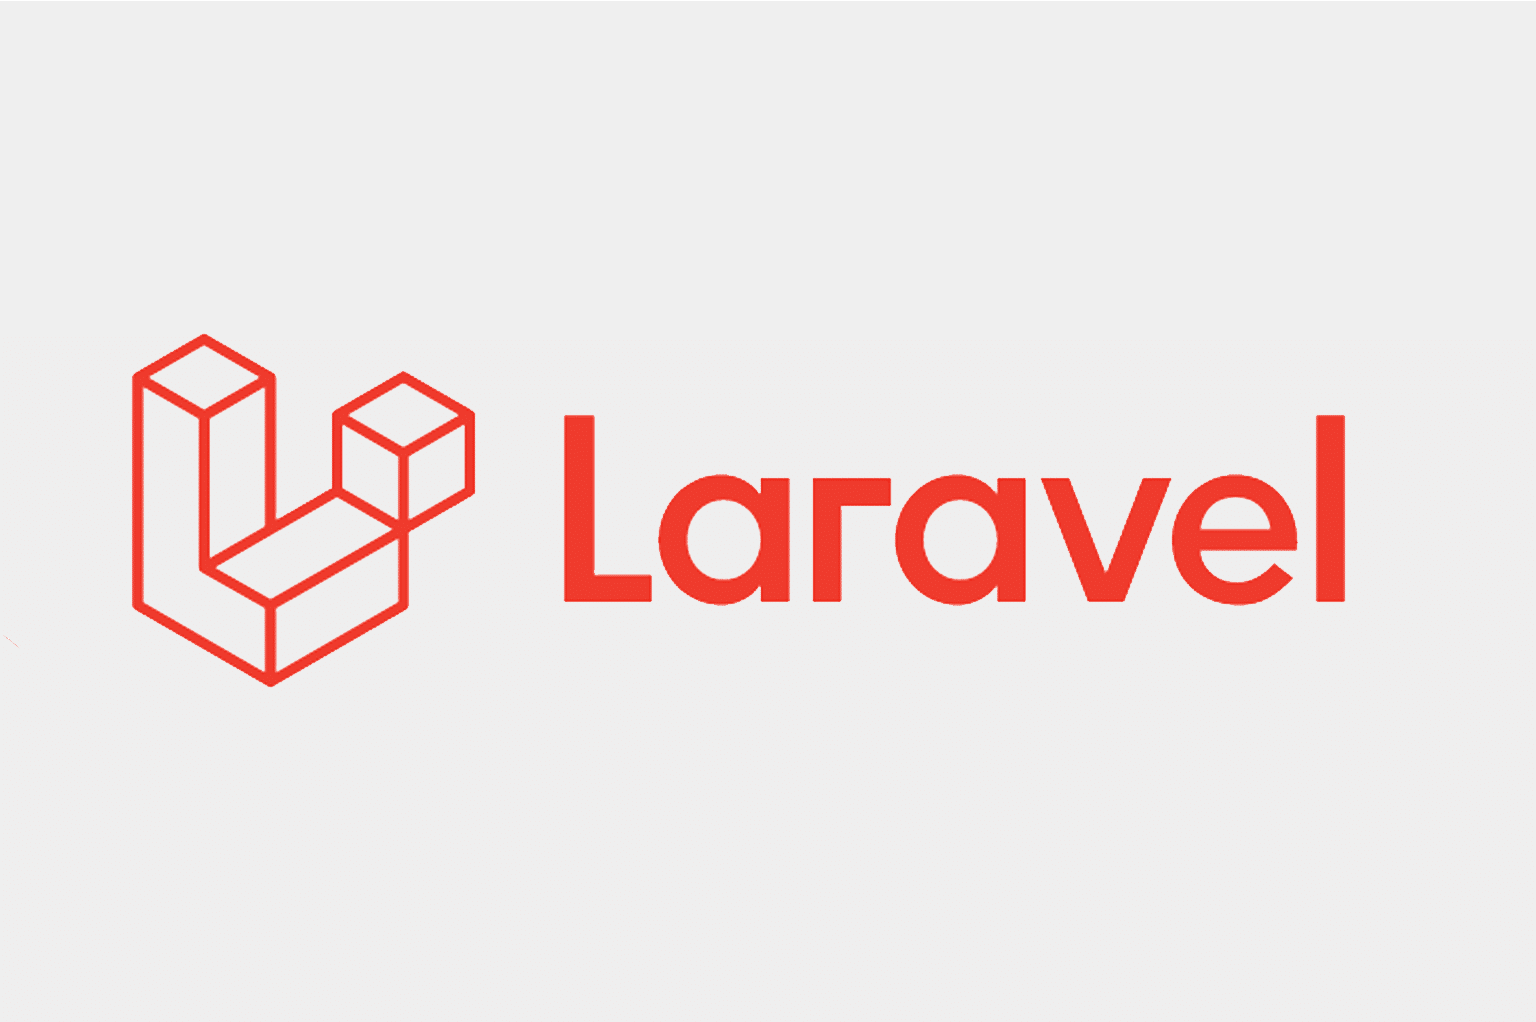 Laravel design and development by Marlin Communications